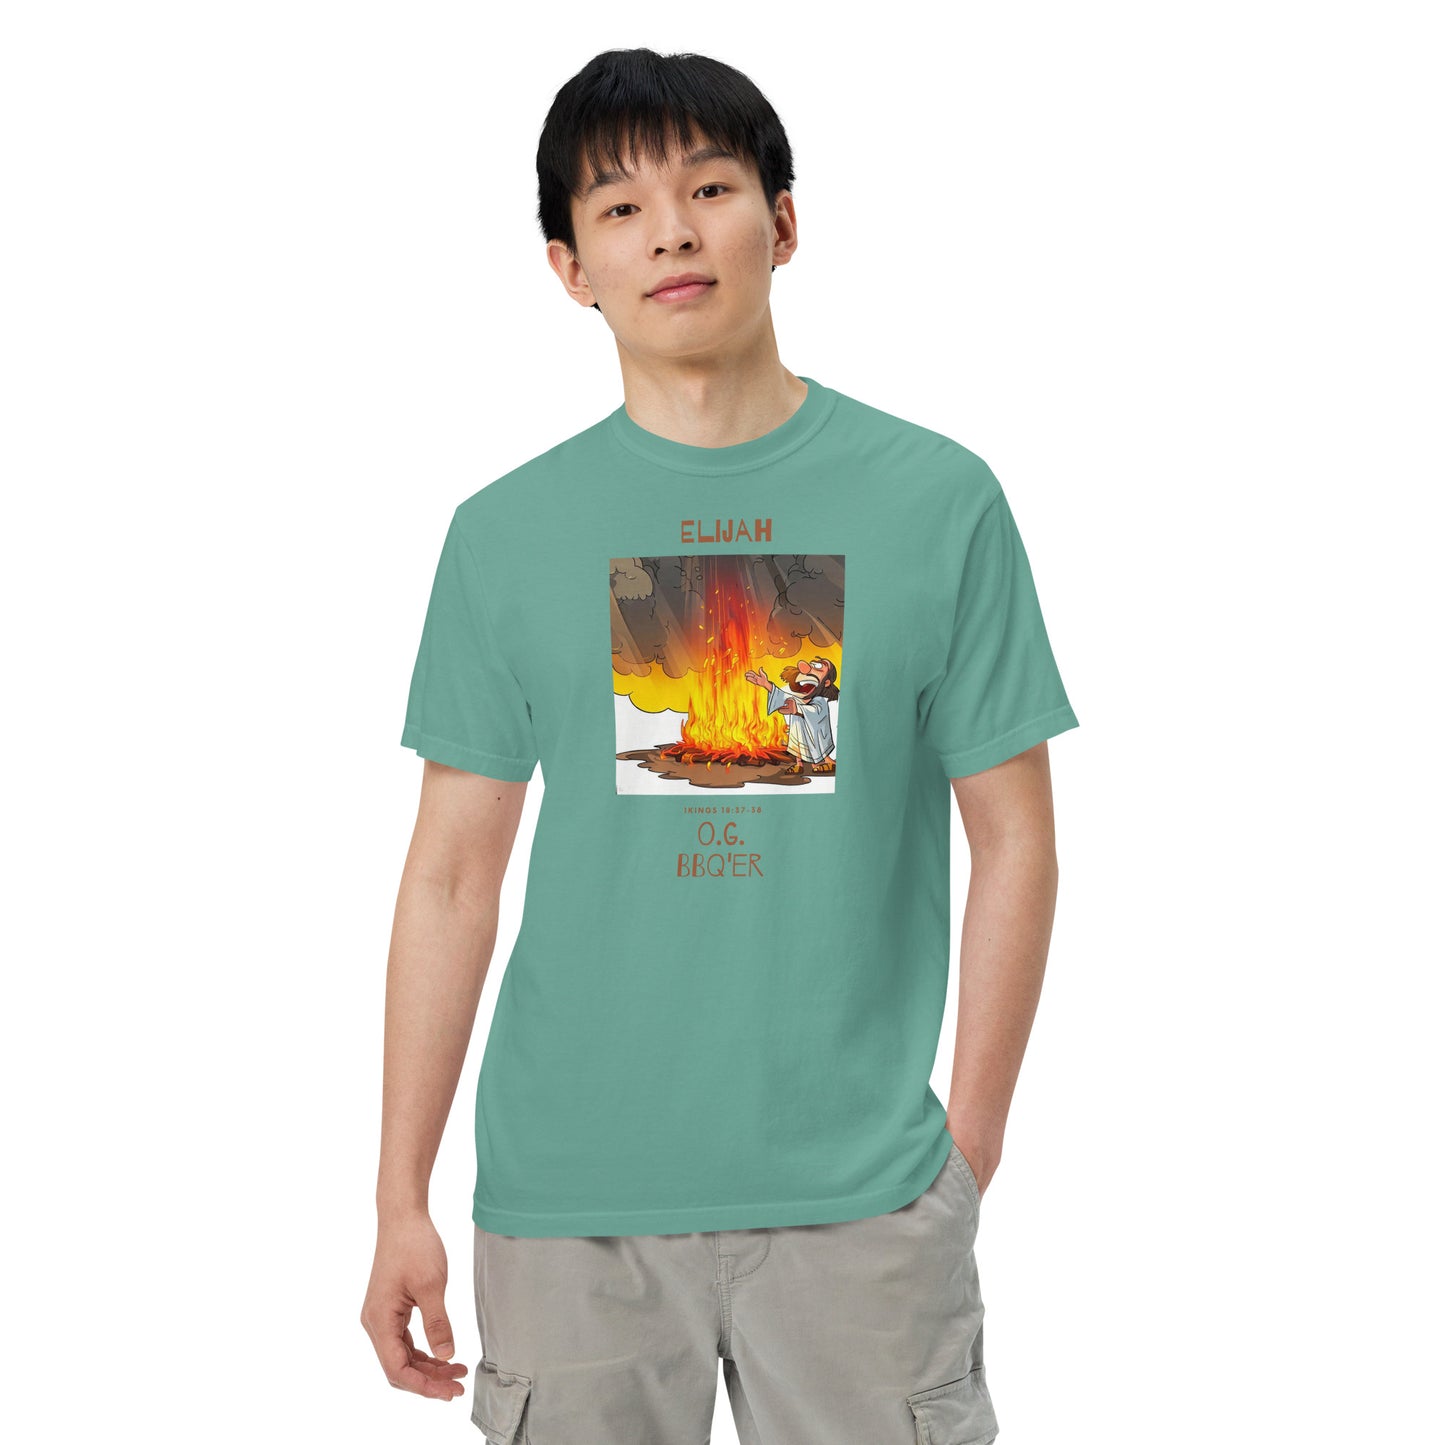 Elijah O.G. BBQ'er Men’s Comfort Colors T-Shirt